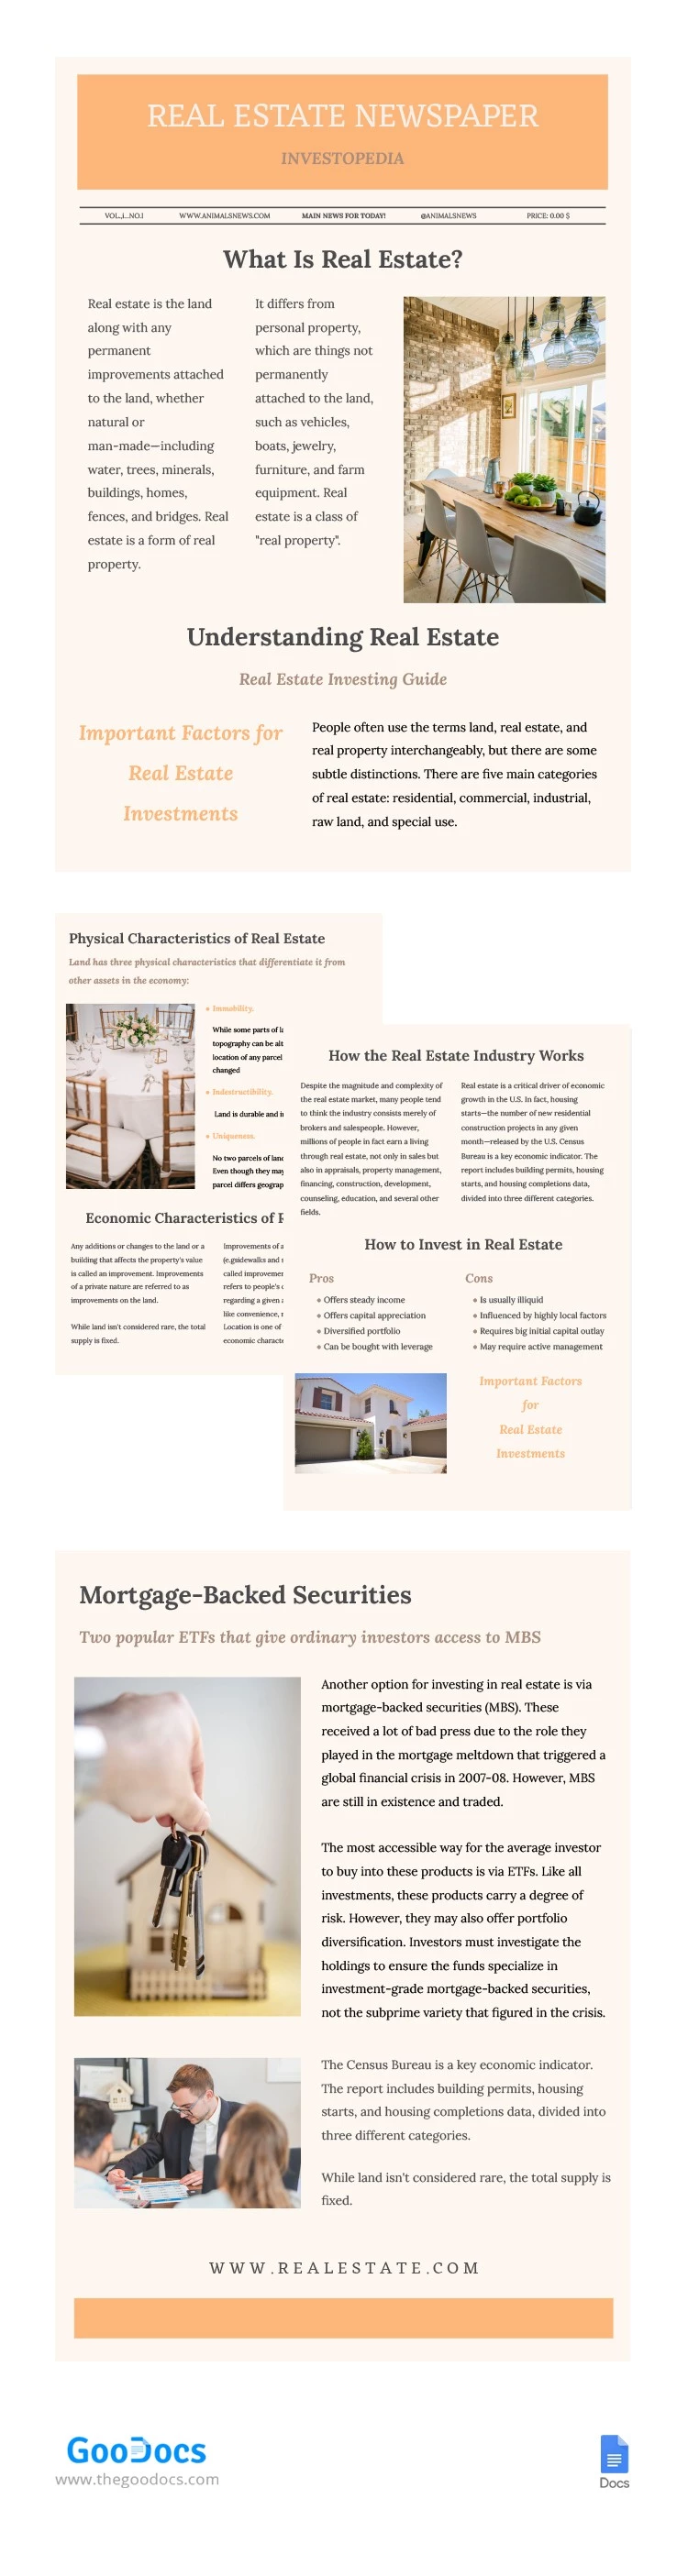 Real Estate Newspaper - free Google Docs Template - 10062212